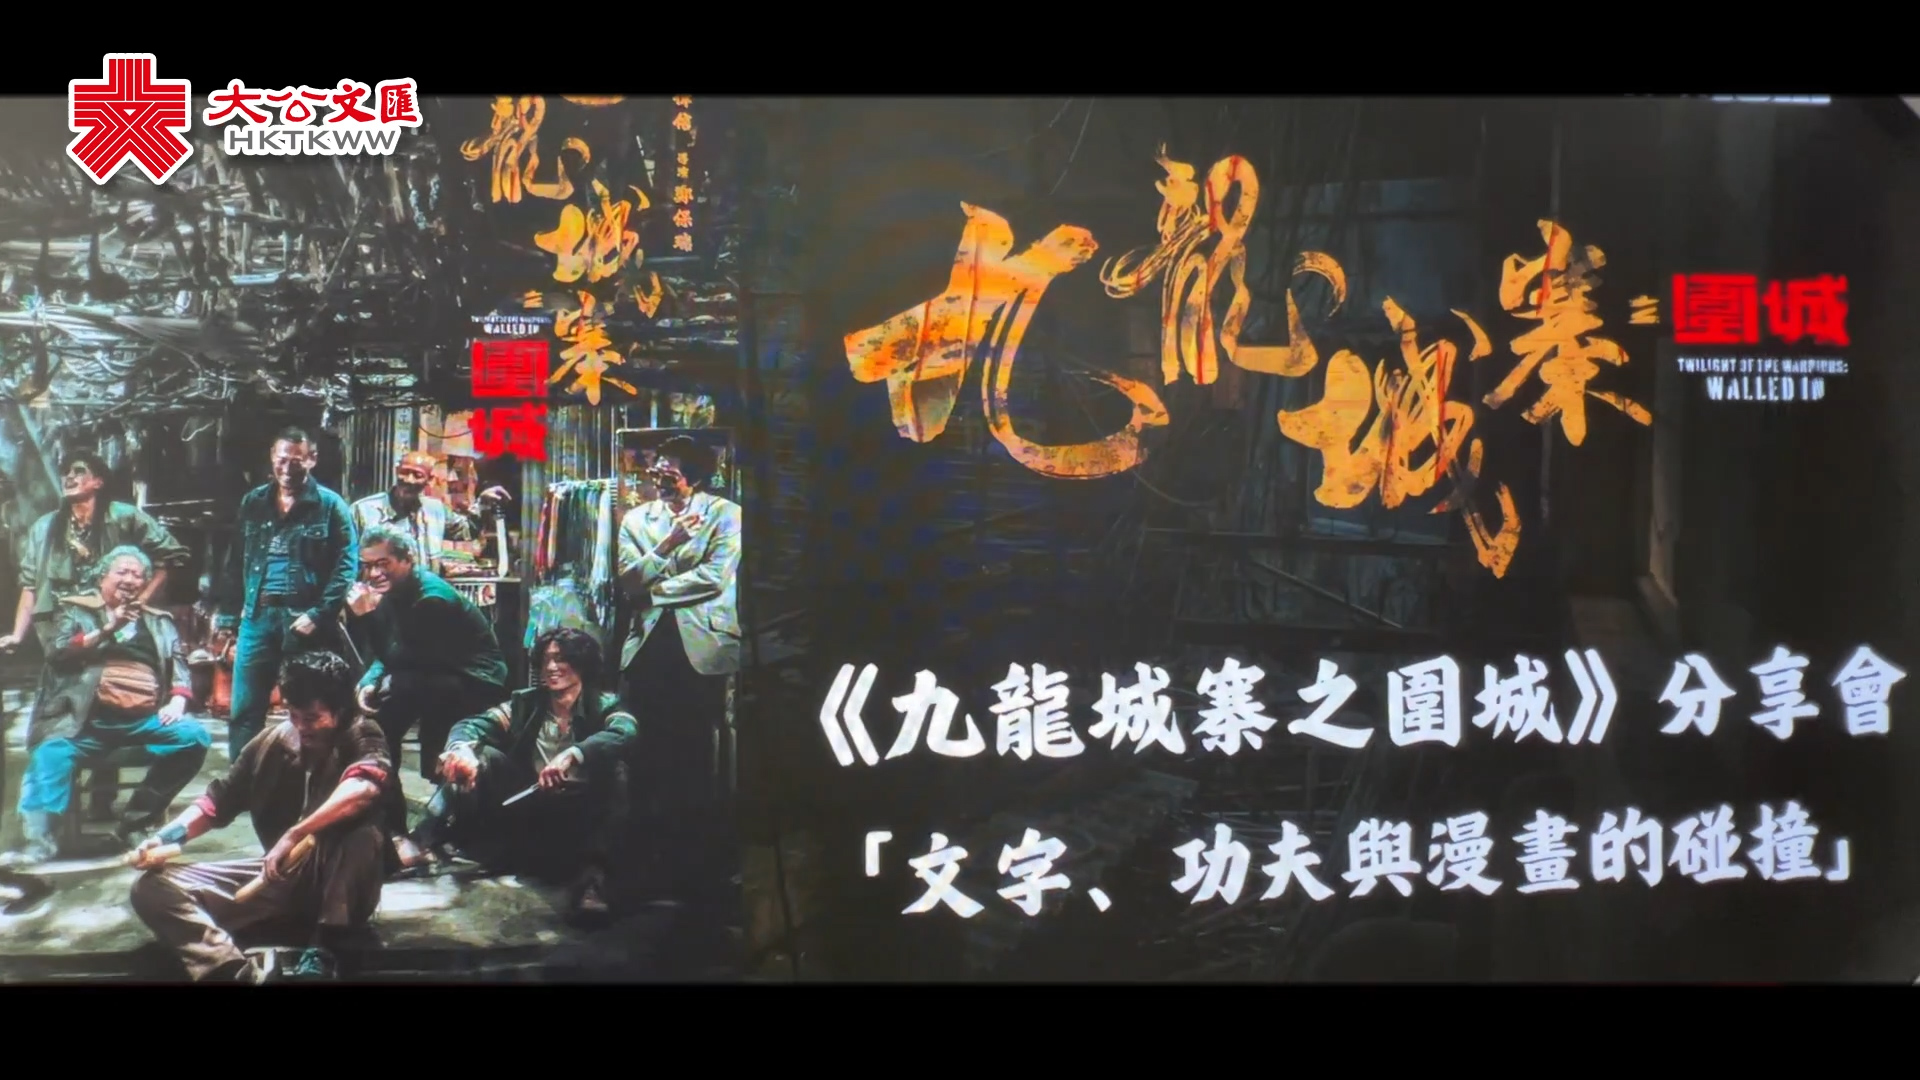  MegaBox Exhibition Kowloon City Walled Miniature Model Wu Yunlong and Qiao Jingfu's Memory Studio: The scene is too real!